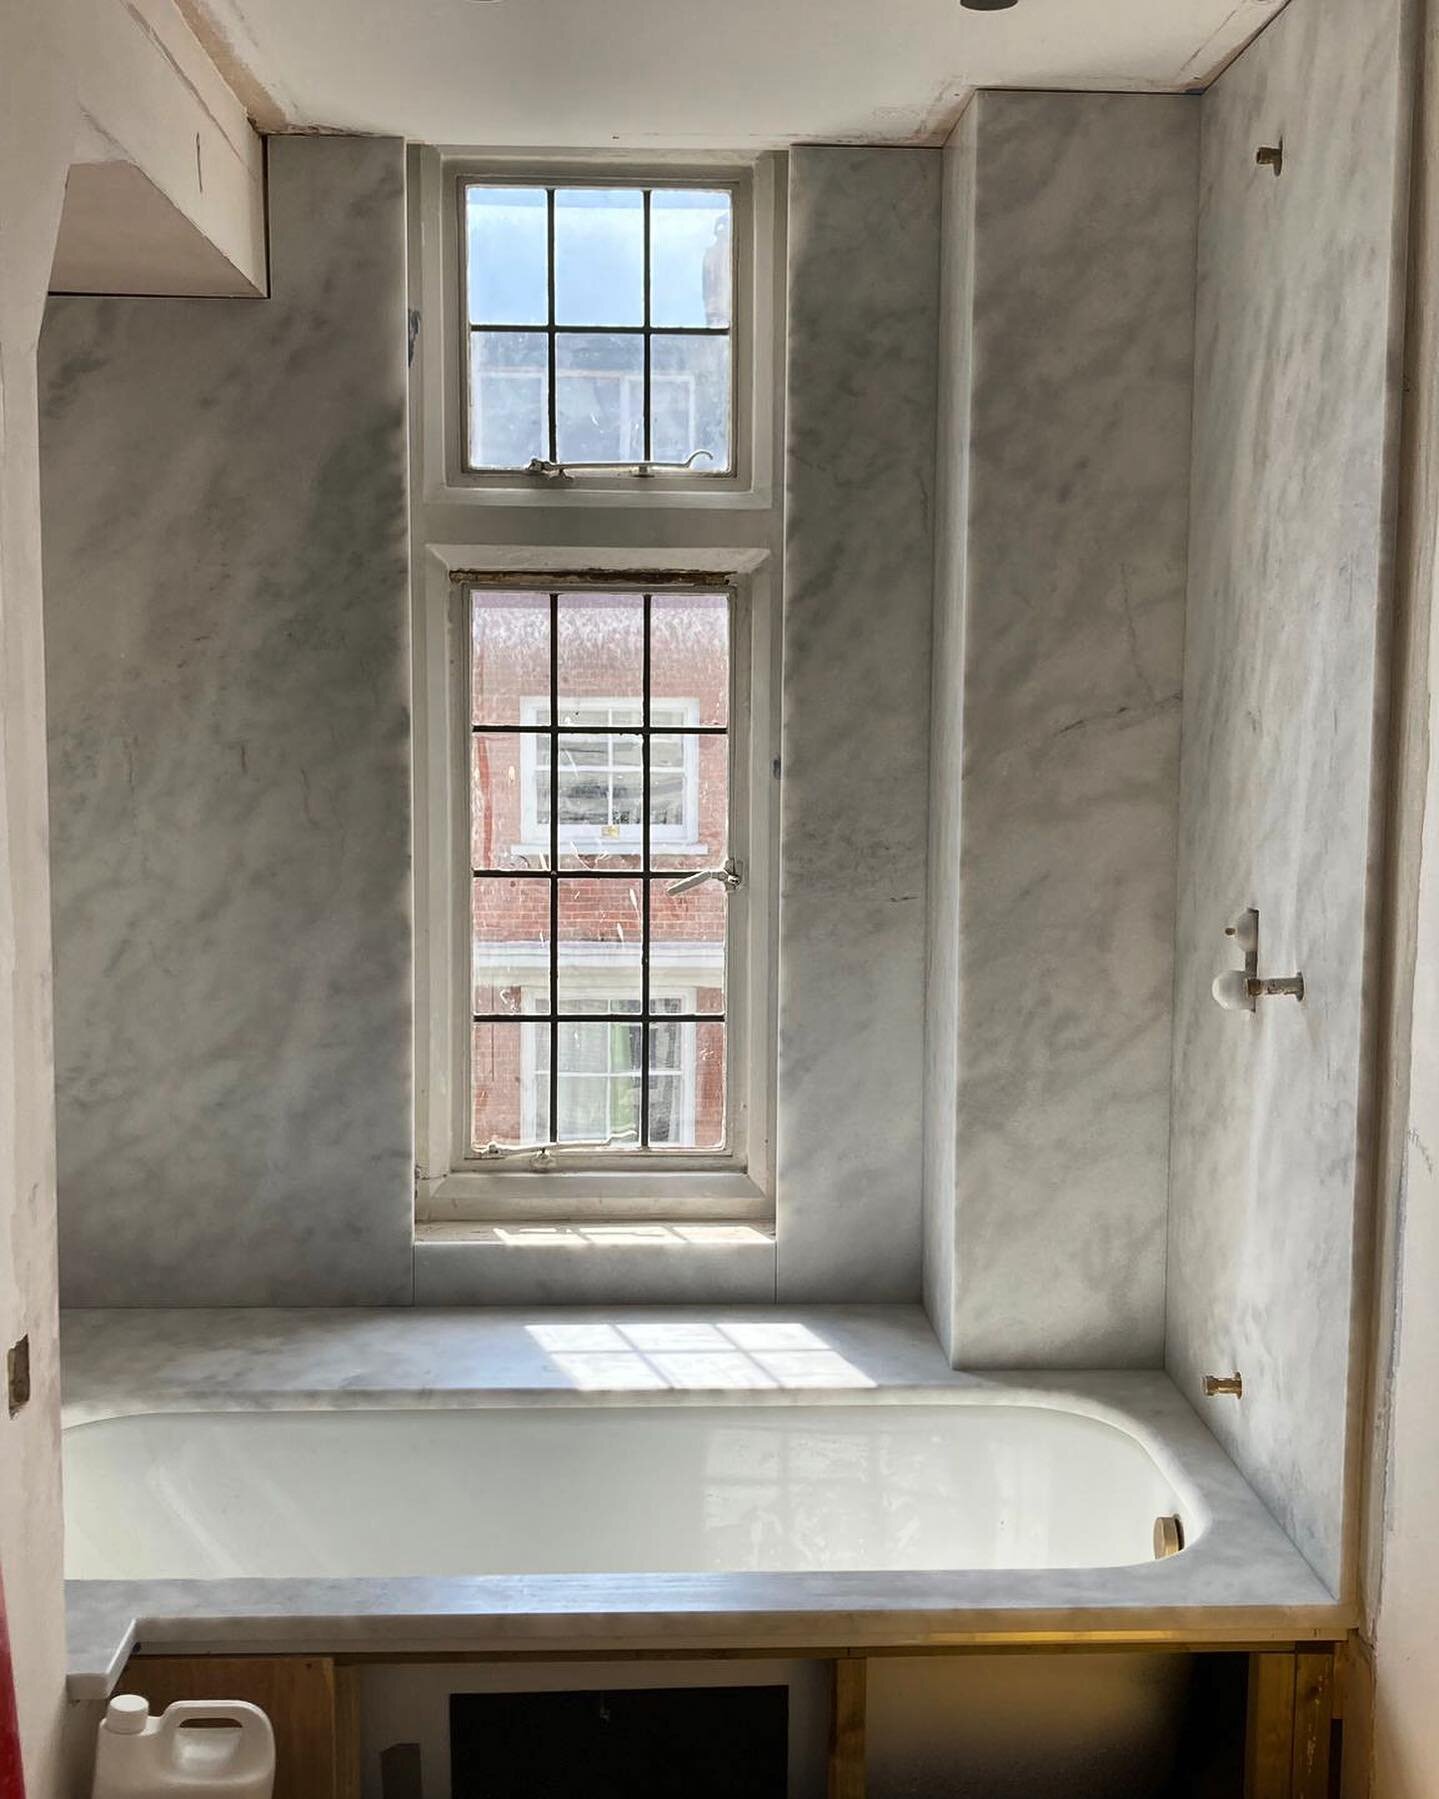 Marylebone bathroom marble taking shape #marble #bathroom #shower #beautiful #exclusive #luxury #construction #bigbeanconstruction #london